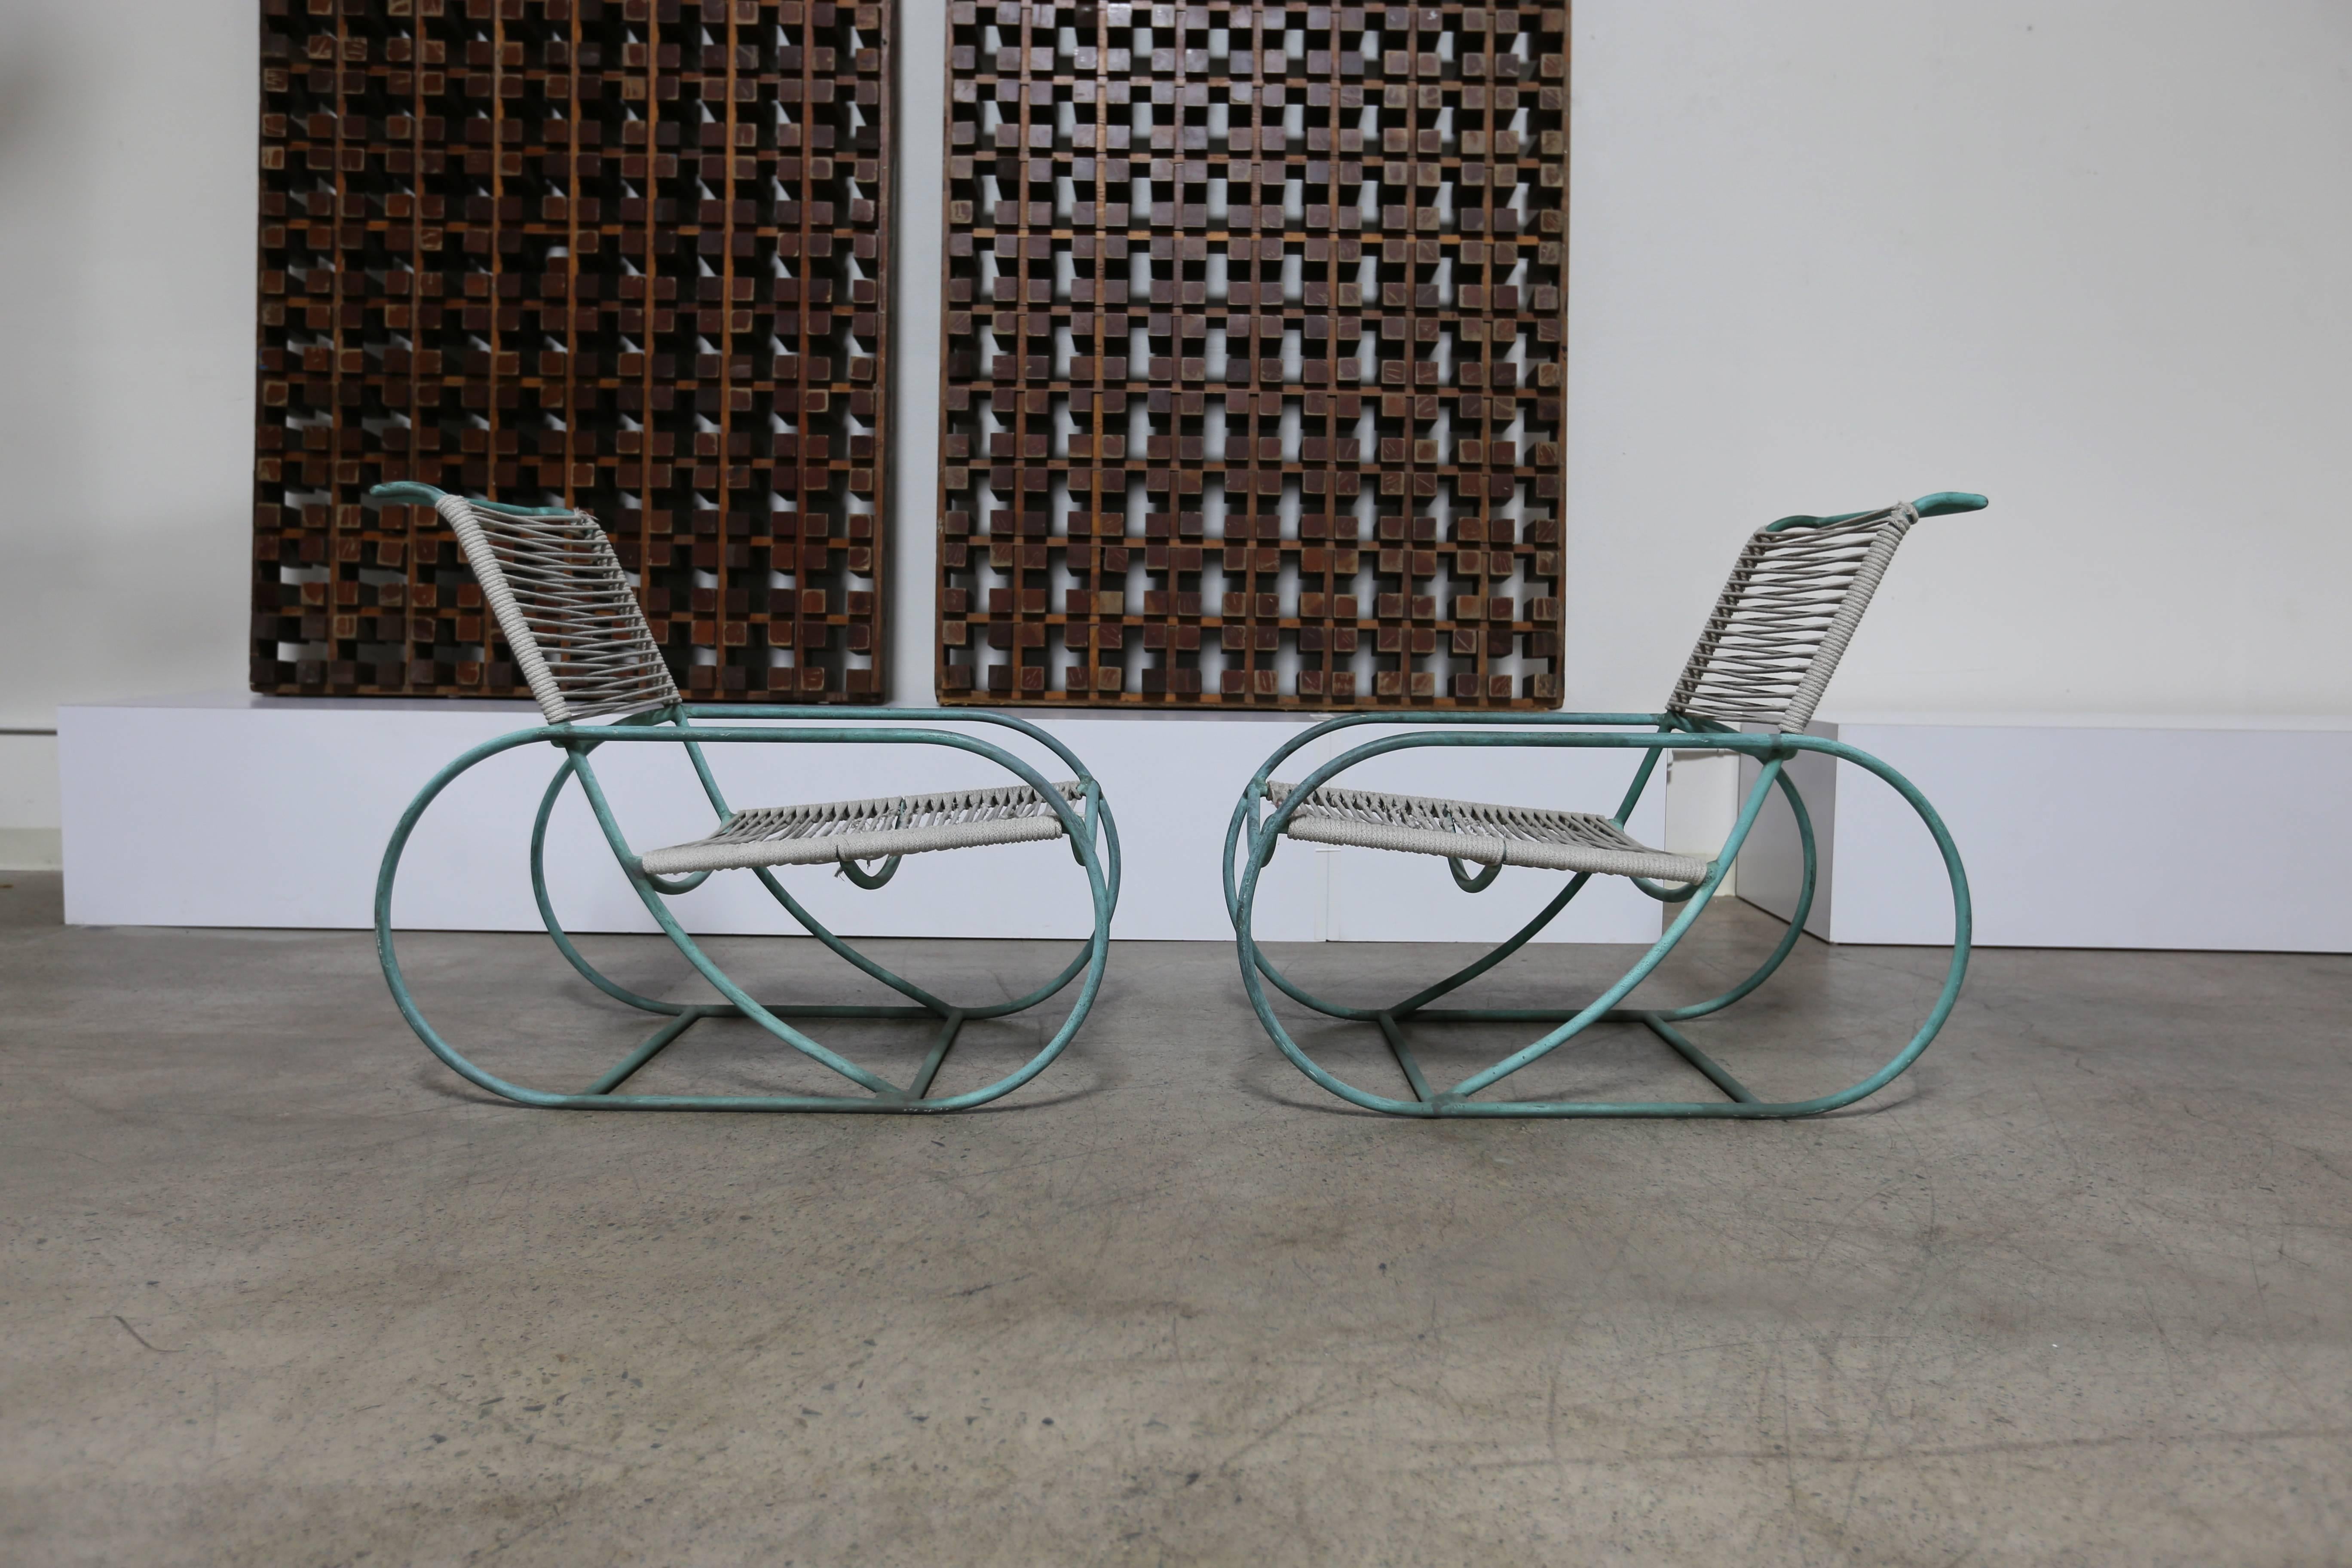 Pair of tubular bronze lounge chairs by Kipp Stewart for Terra Furniture.